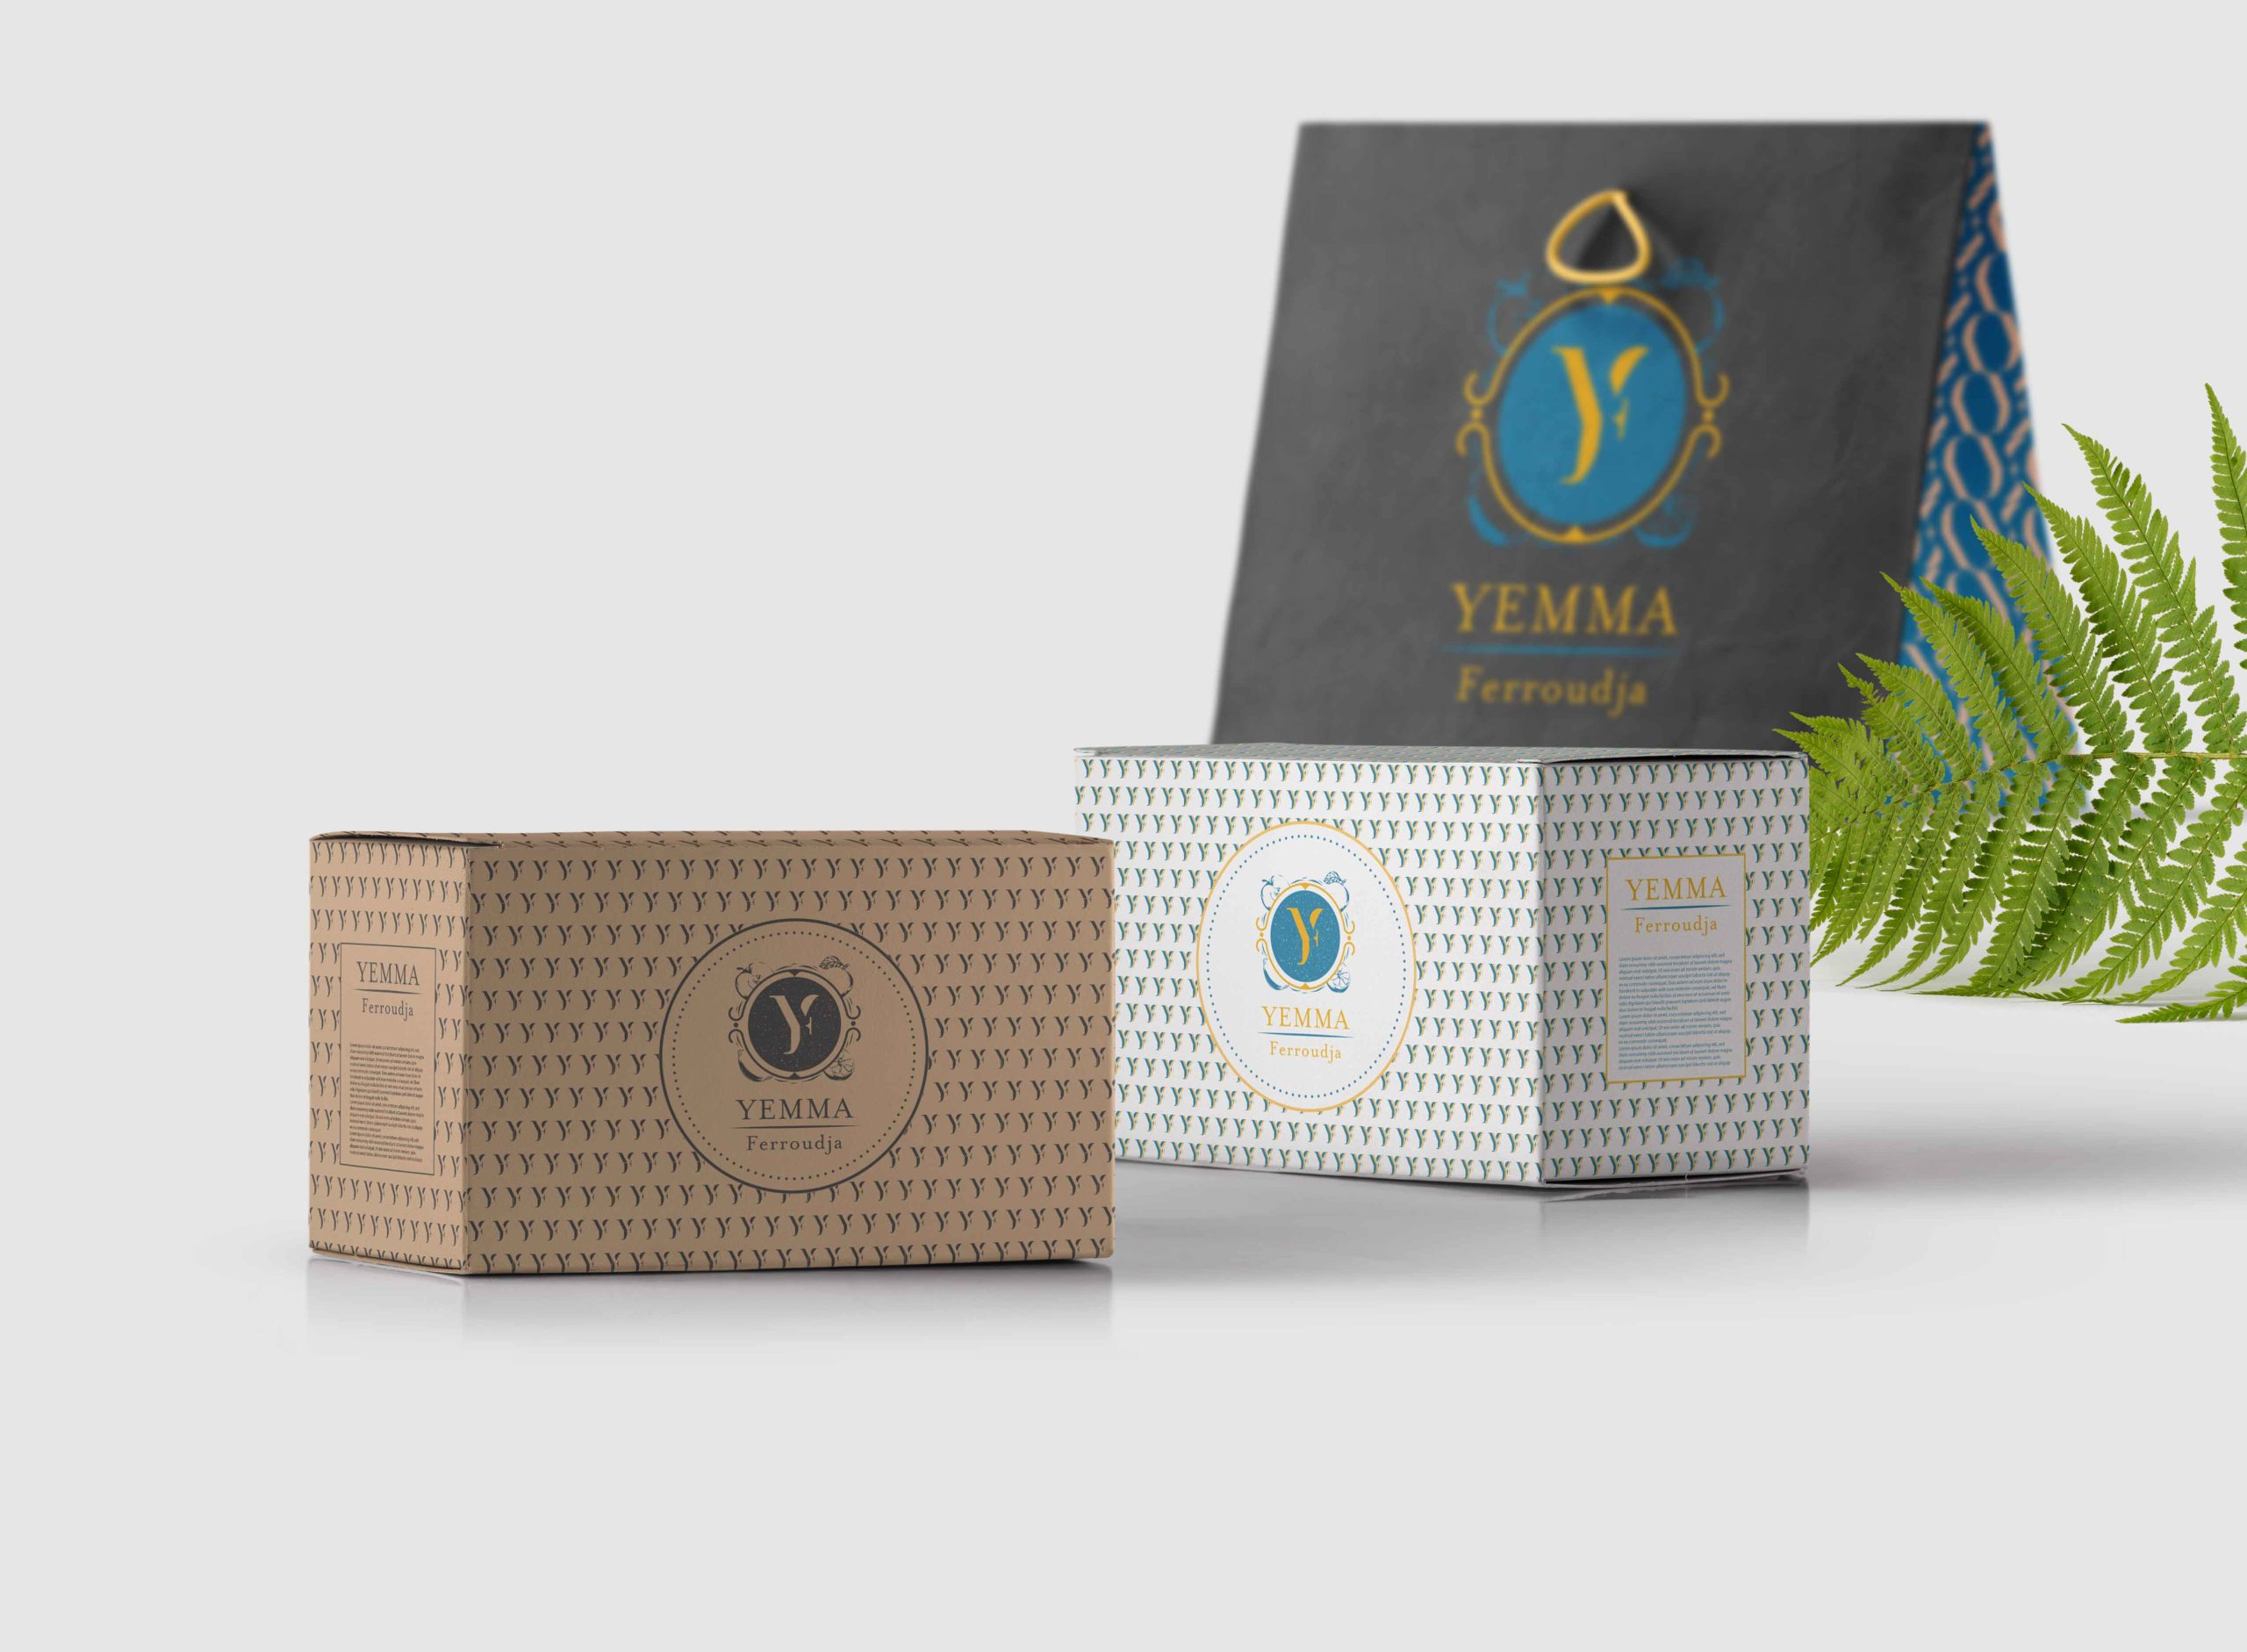 Création produit, logo pour yemma ferroudja Samir Rachedi